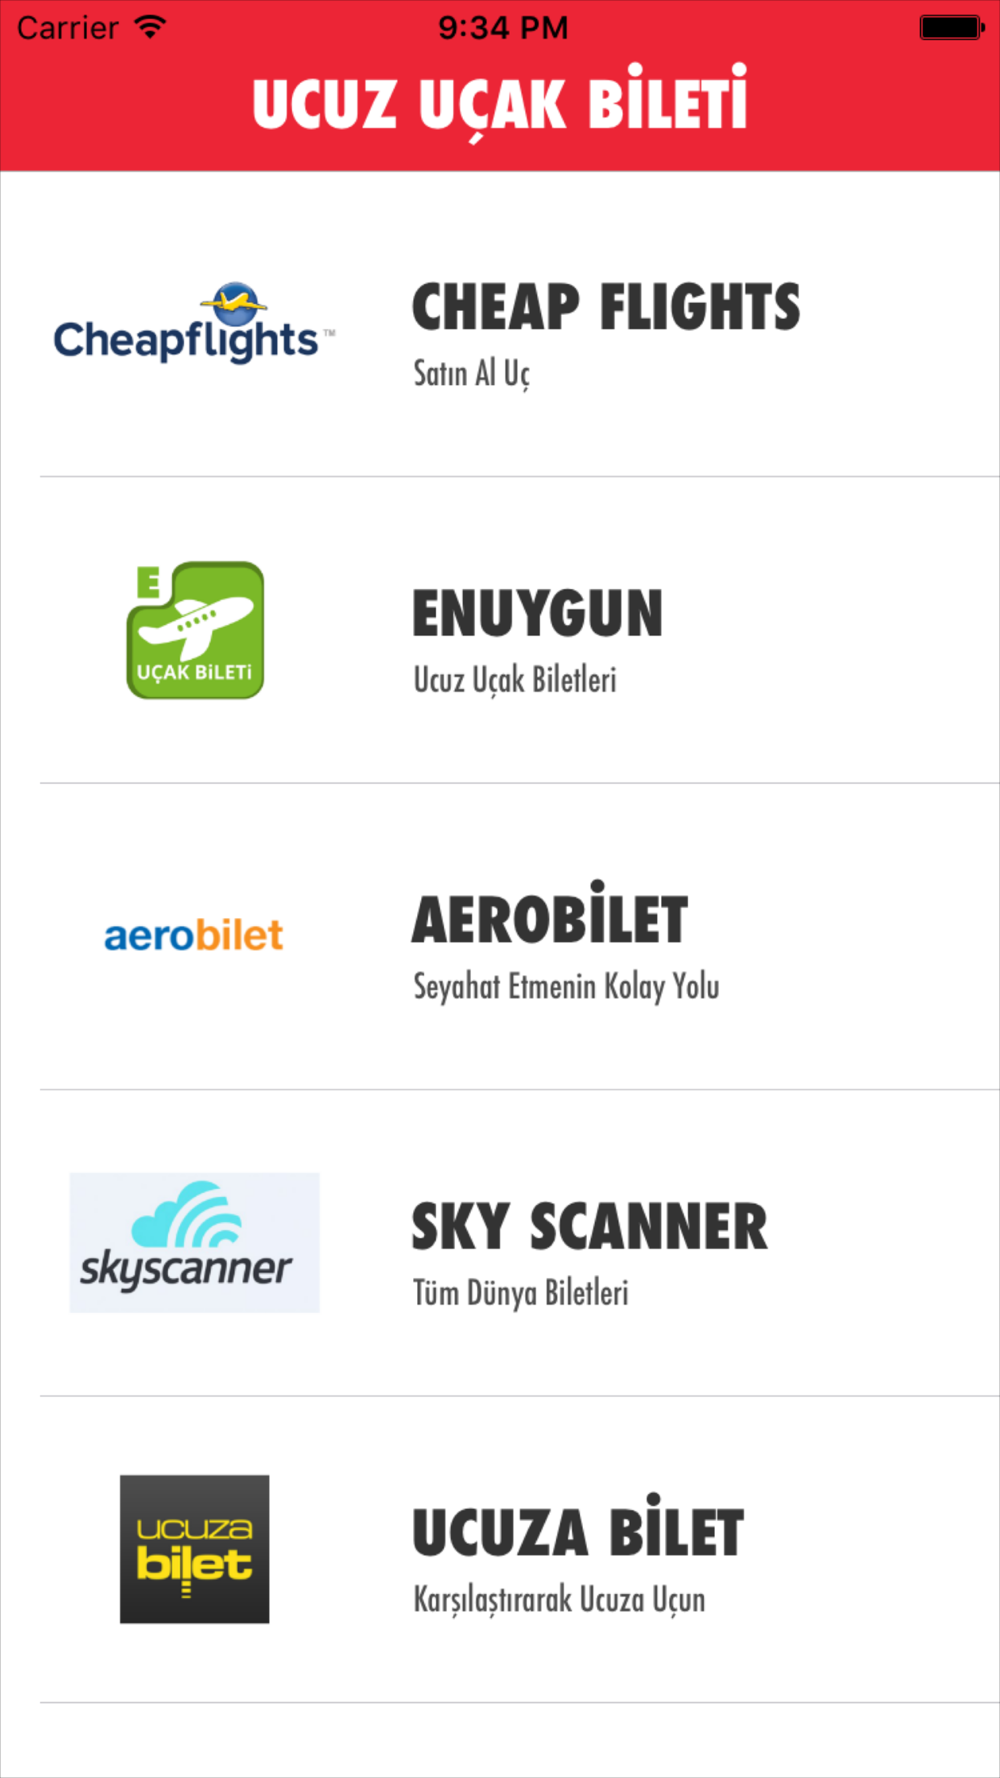 Uçak Bileti - Ucuza Bilet Satın Al Uç Free Download App for iPhone -  STEPrimo.com